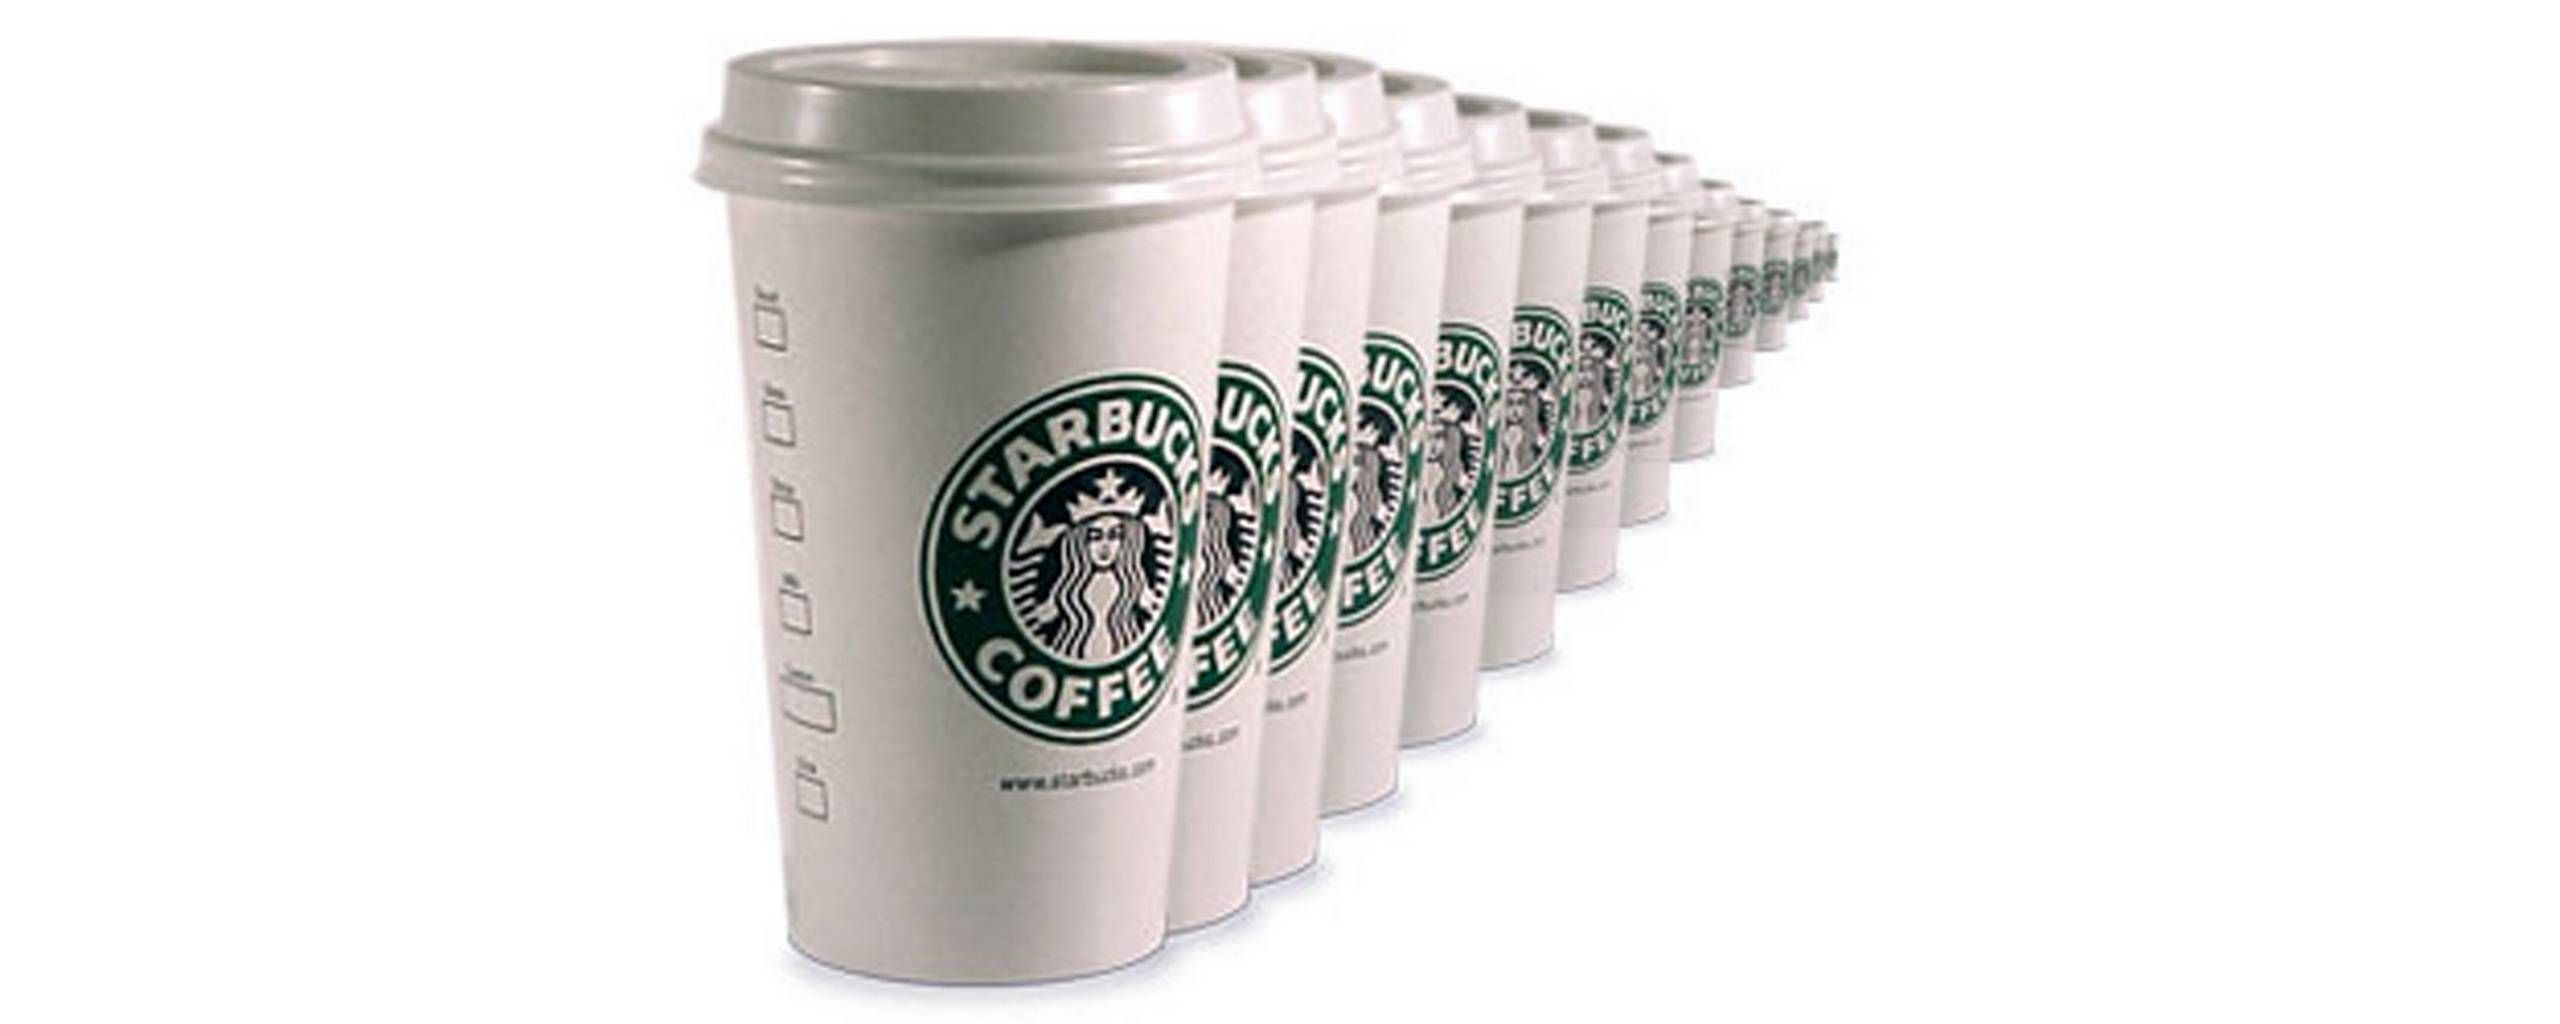 propel gennemse Grønne bønner Starbucks vil sælge kaffe i Danmark